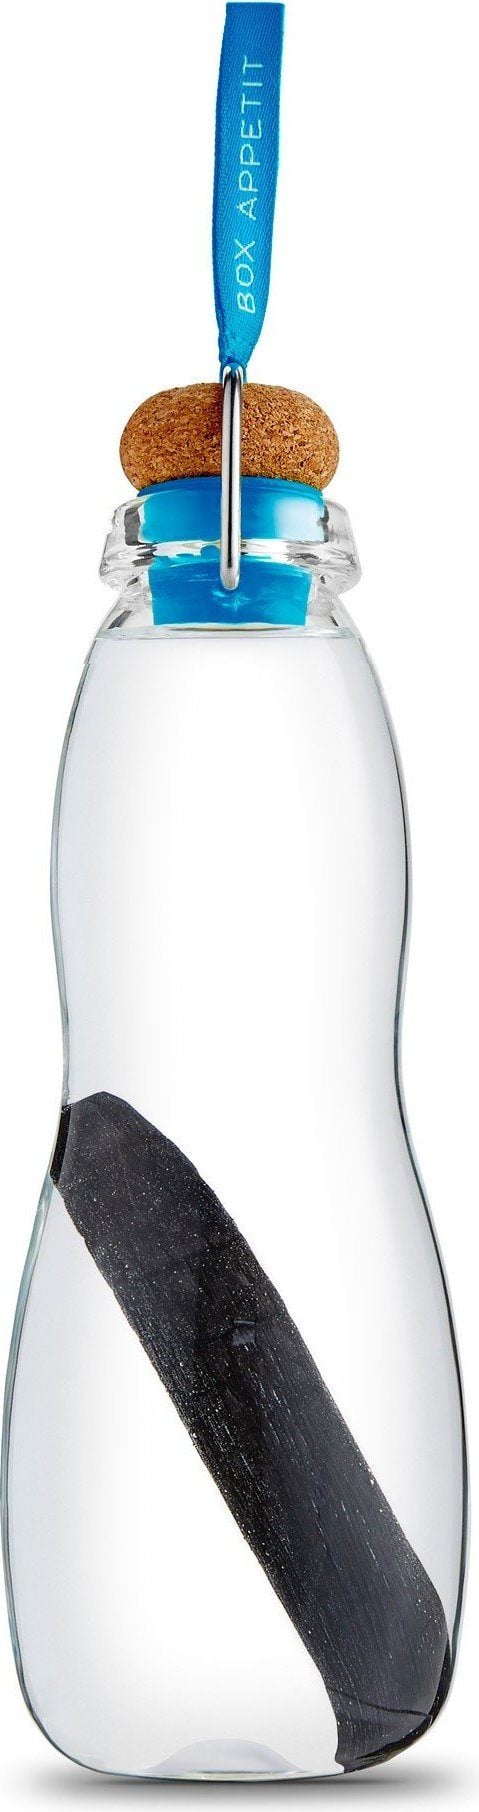 https://3fa-media.com/blackblum/black-blum-eau-good-water-bottle-with-filter-blue-glass__egg001-b-s2500x2500.jpg